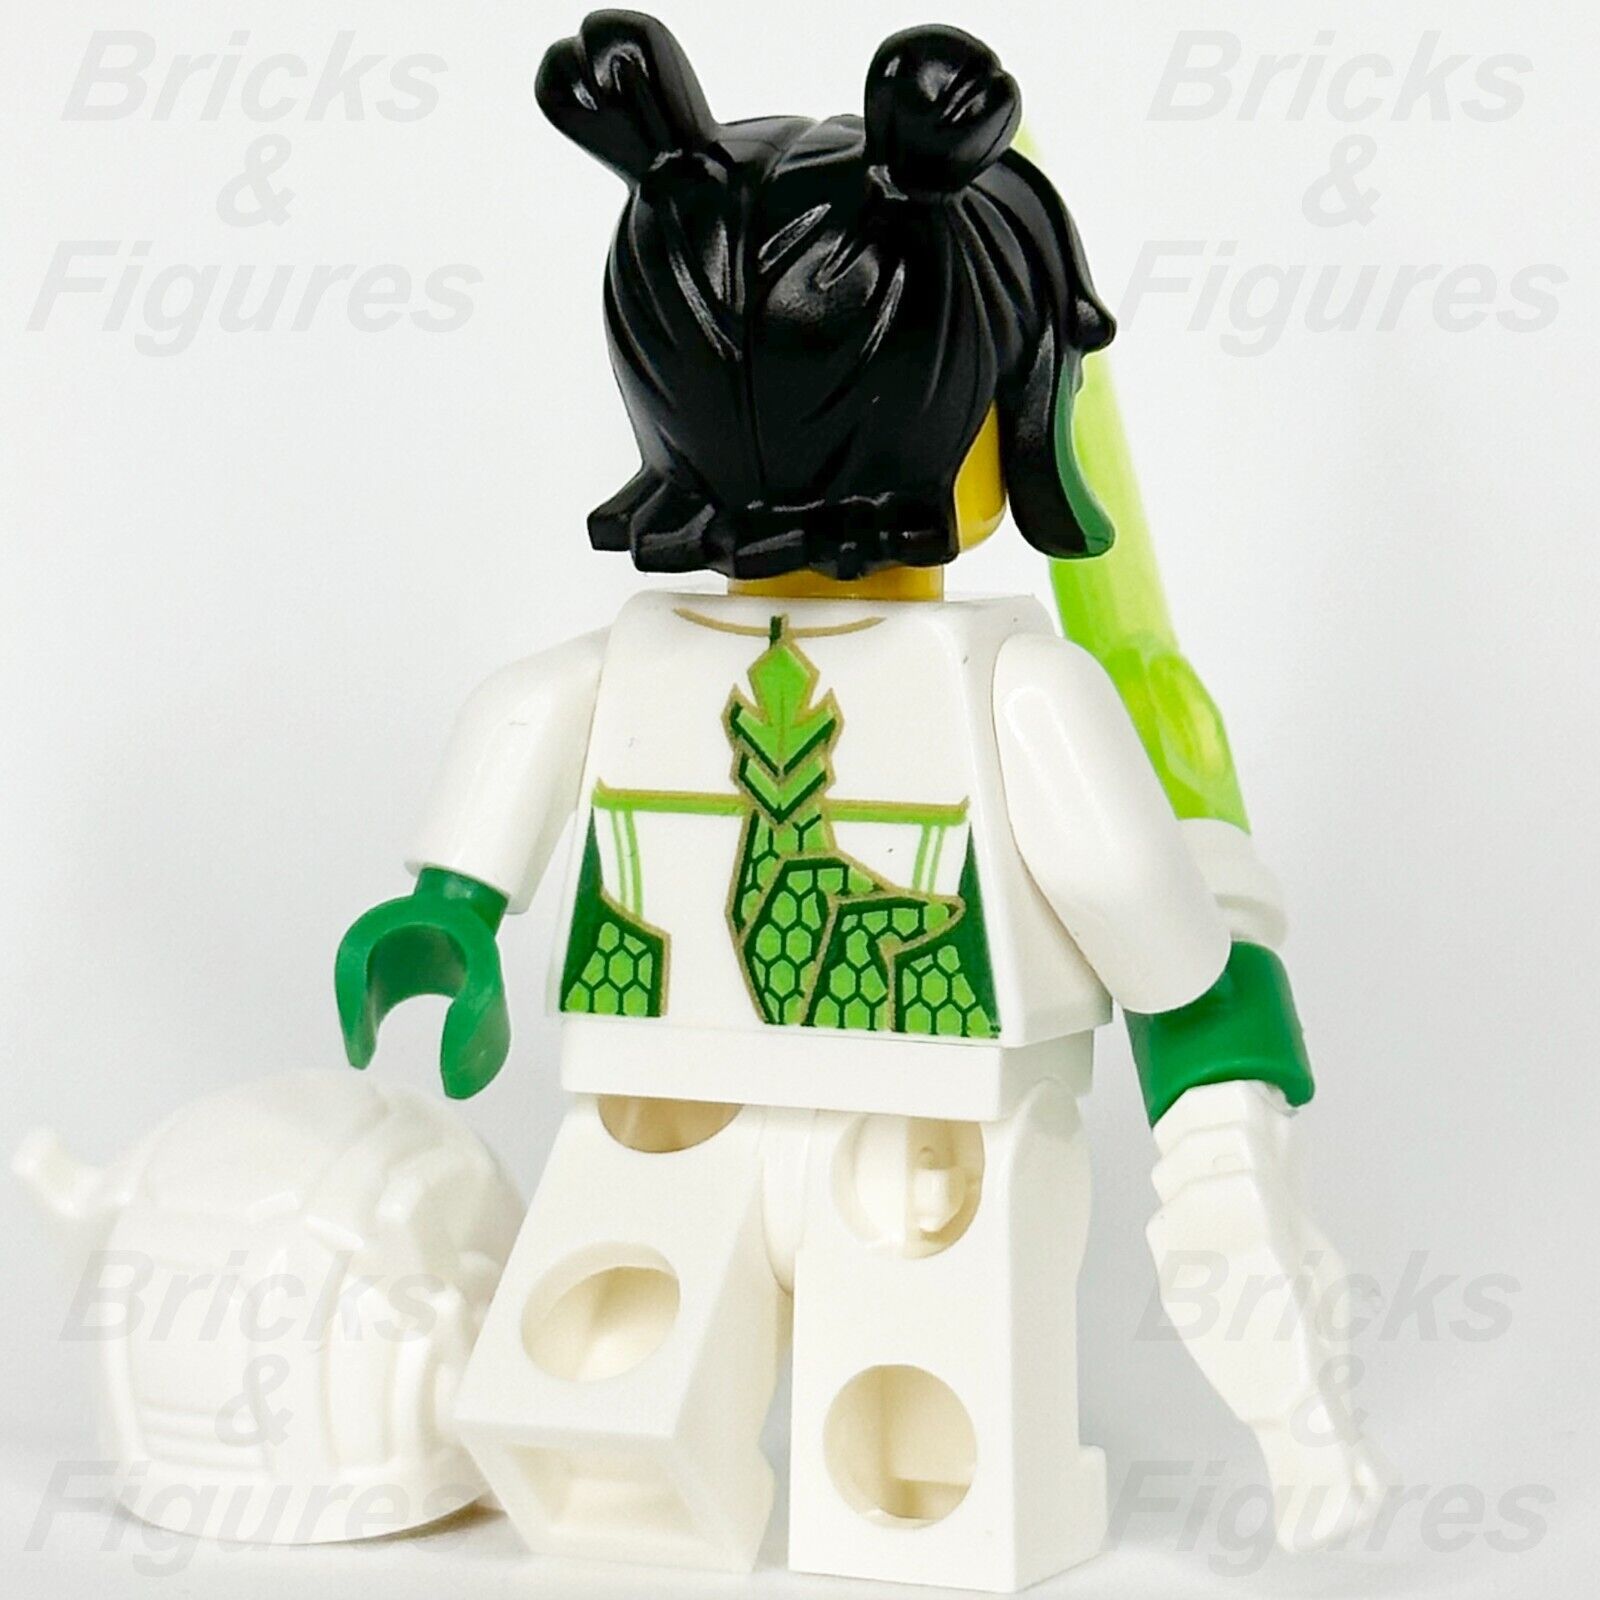 LEGO MONKIE KID MEI MINIFIGURE DRAGON ARMOUR SUIT MINIFIG MK003 80013 80016 80006 04